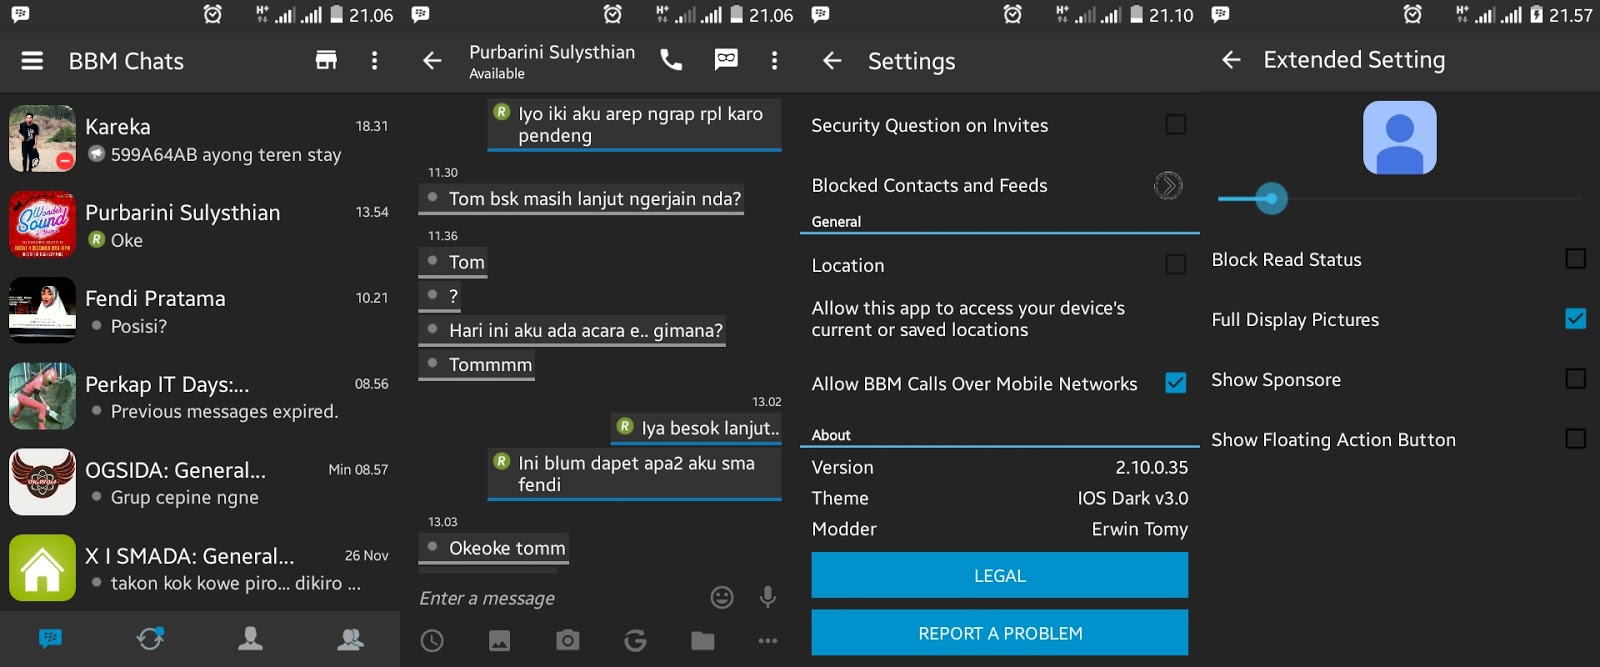 Extension settings. BBM bbm2 Mod for Android v3.3.13 APK. Dark v2. Telegram IOS Dark Theme.